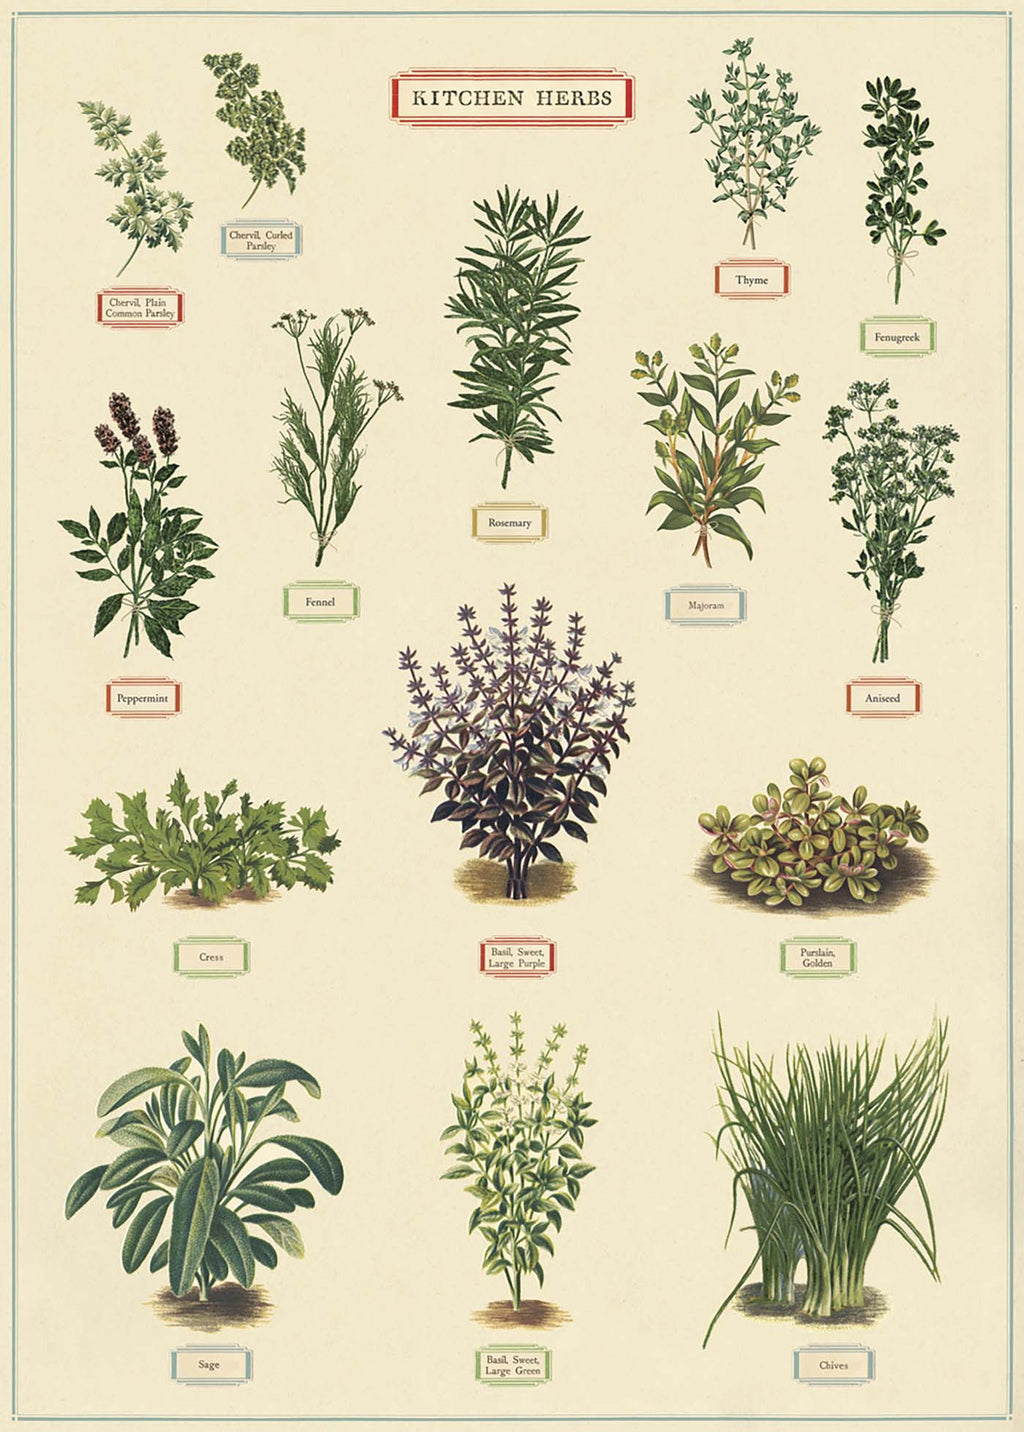 Herbs Print